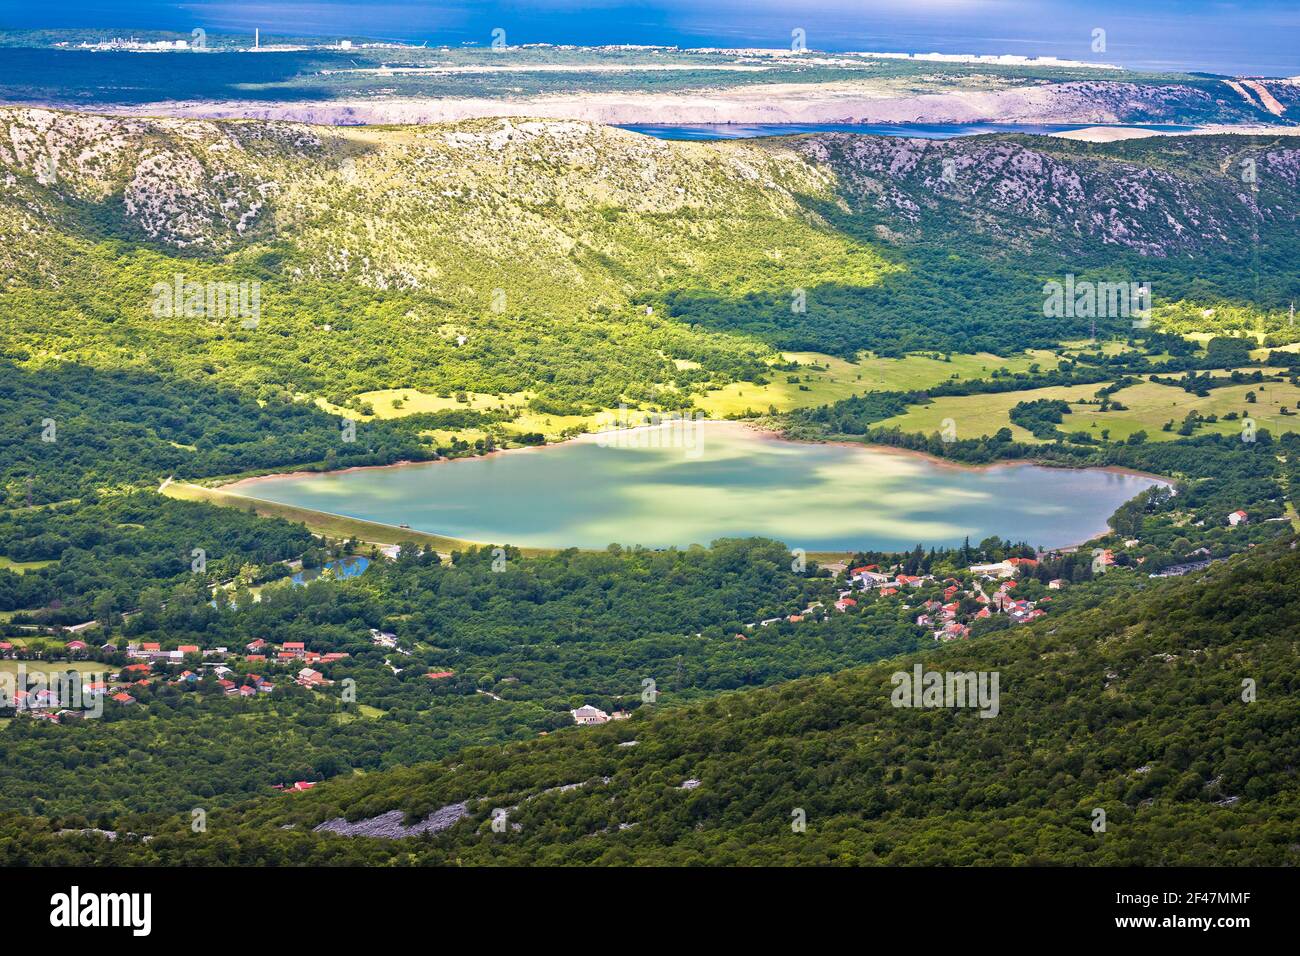 Vinodol valley and lake Tribalj view from Mahavica viewpoint, Kvarner bay region of Croatia Stock Photo